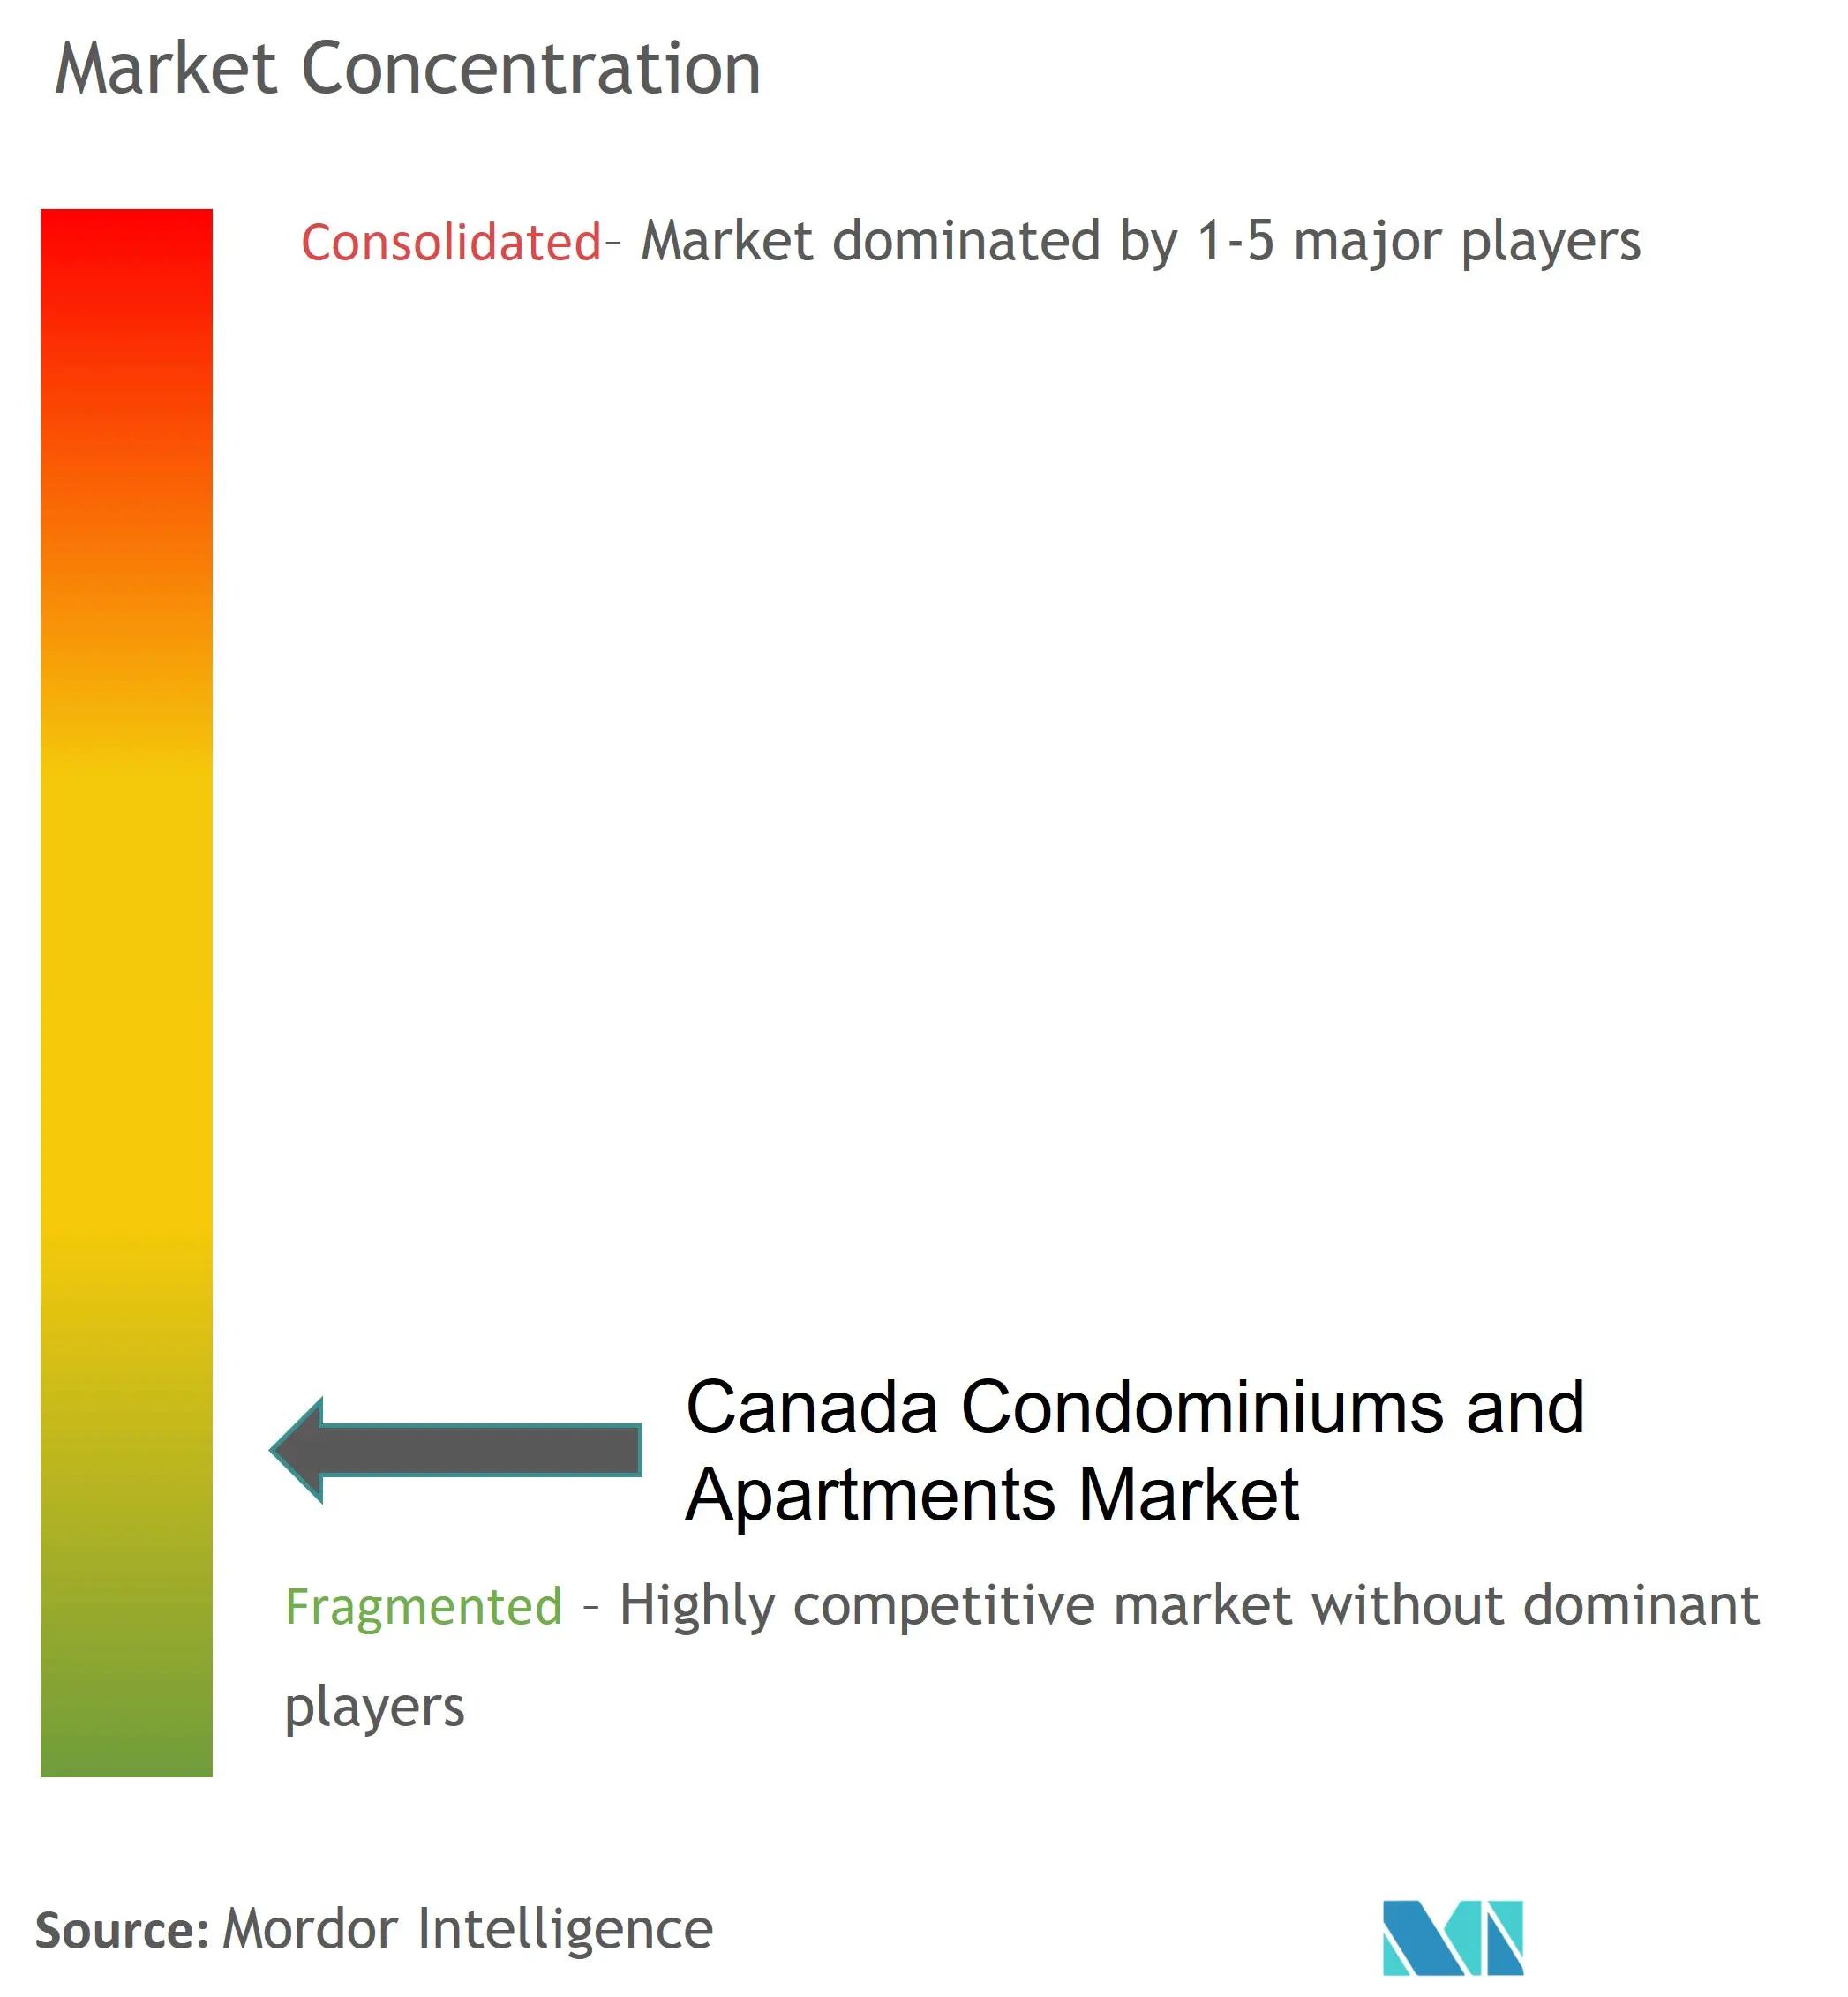 Canada Condominiums and Apartments Market Concentration